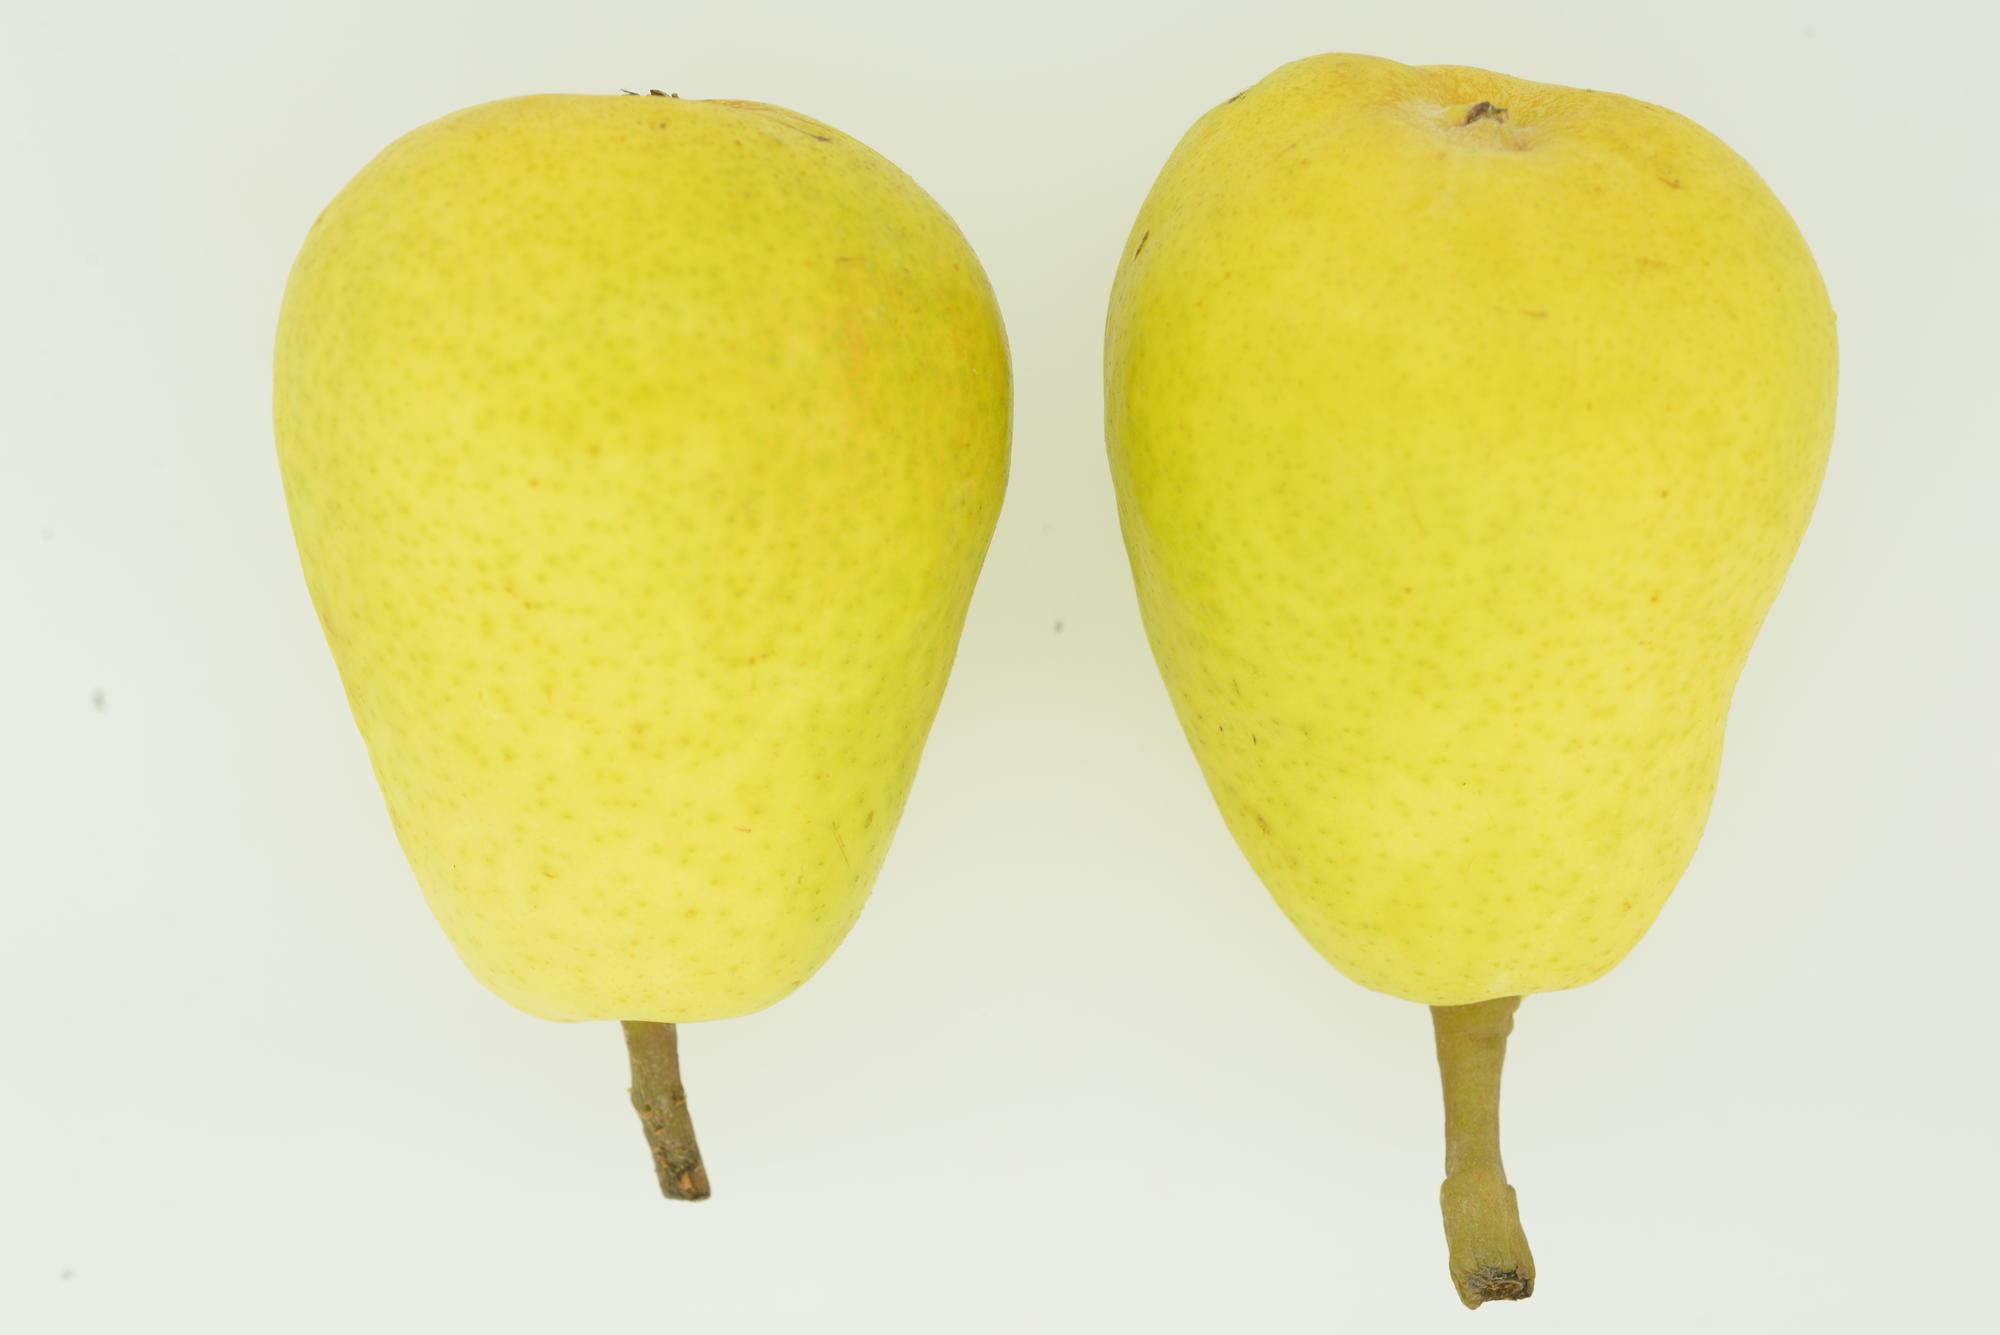 5 Uses for Bartlett Pears – The Groves